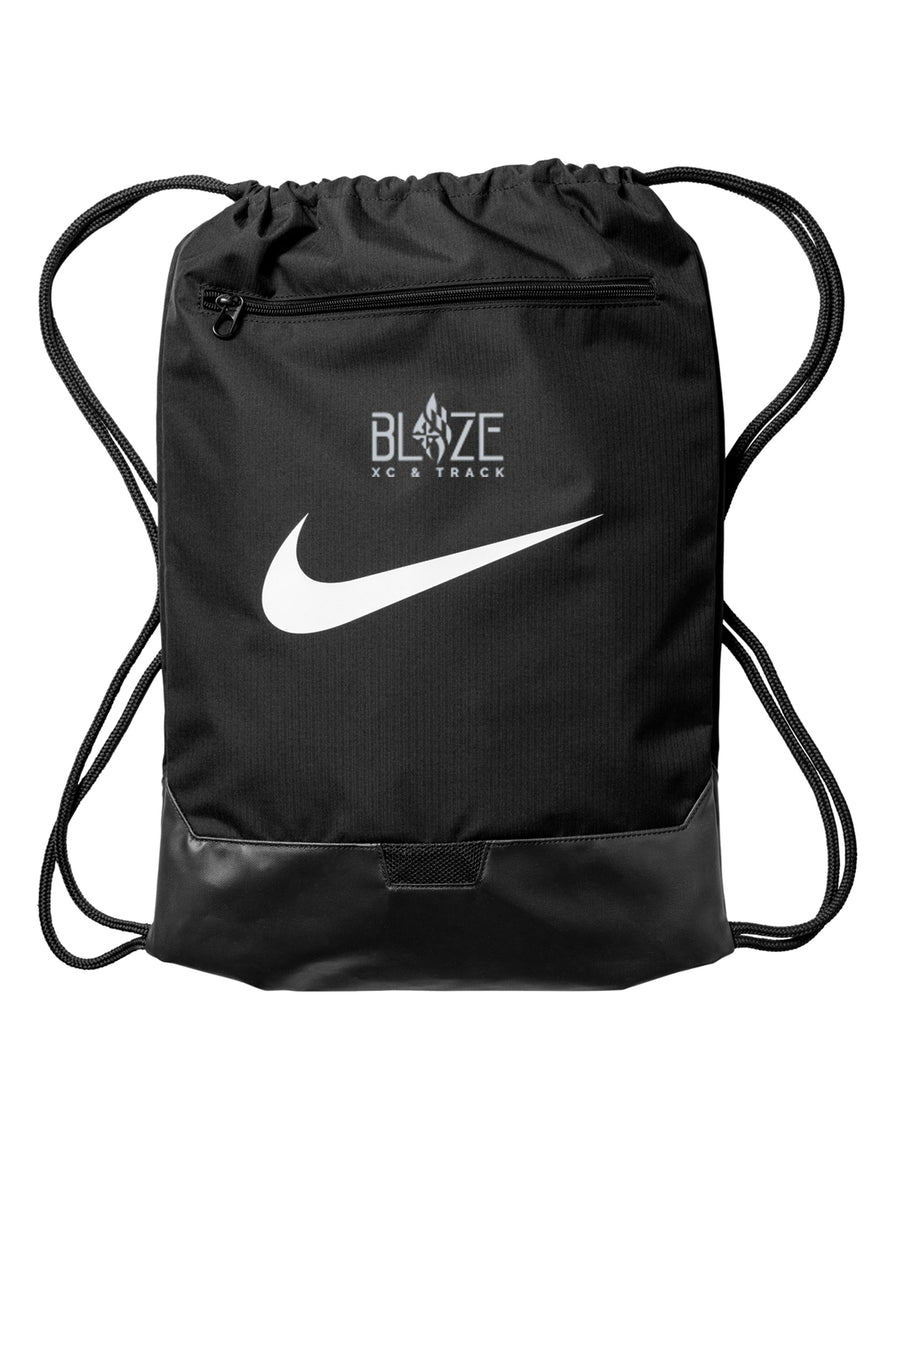 LOUYAA BLAZE logo- Drawstring Nike Bag